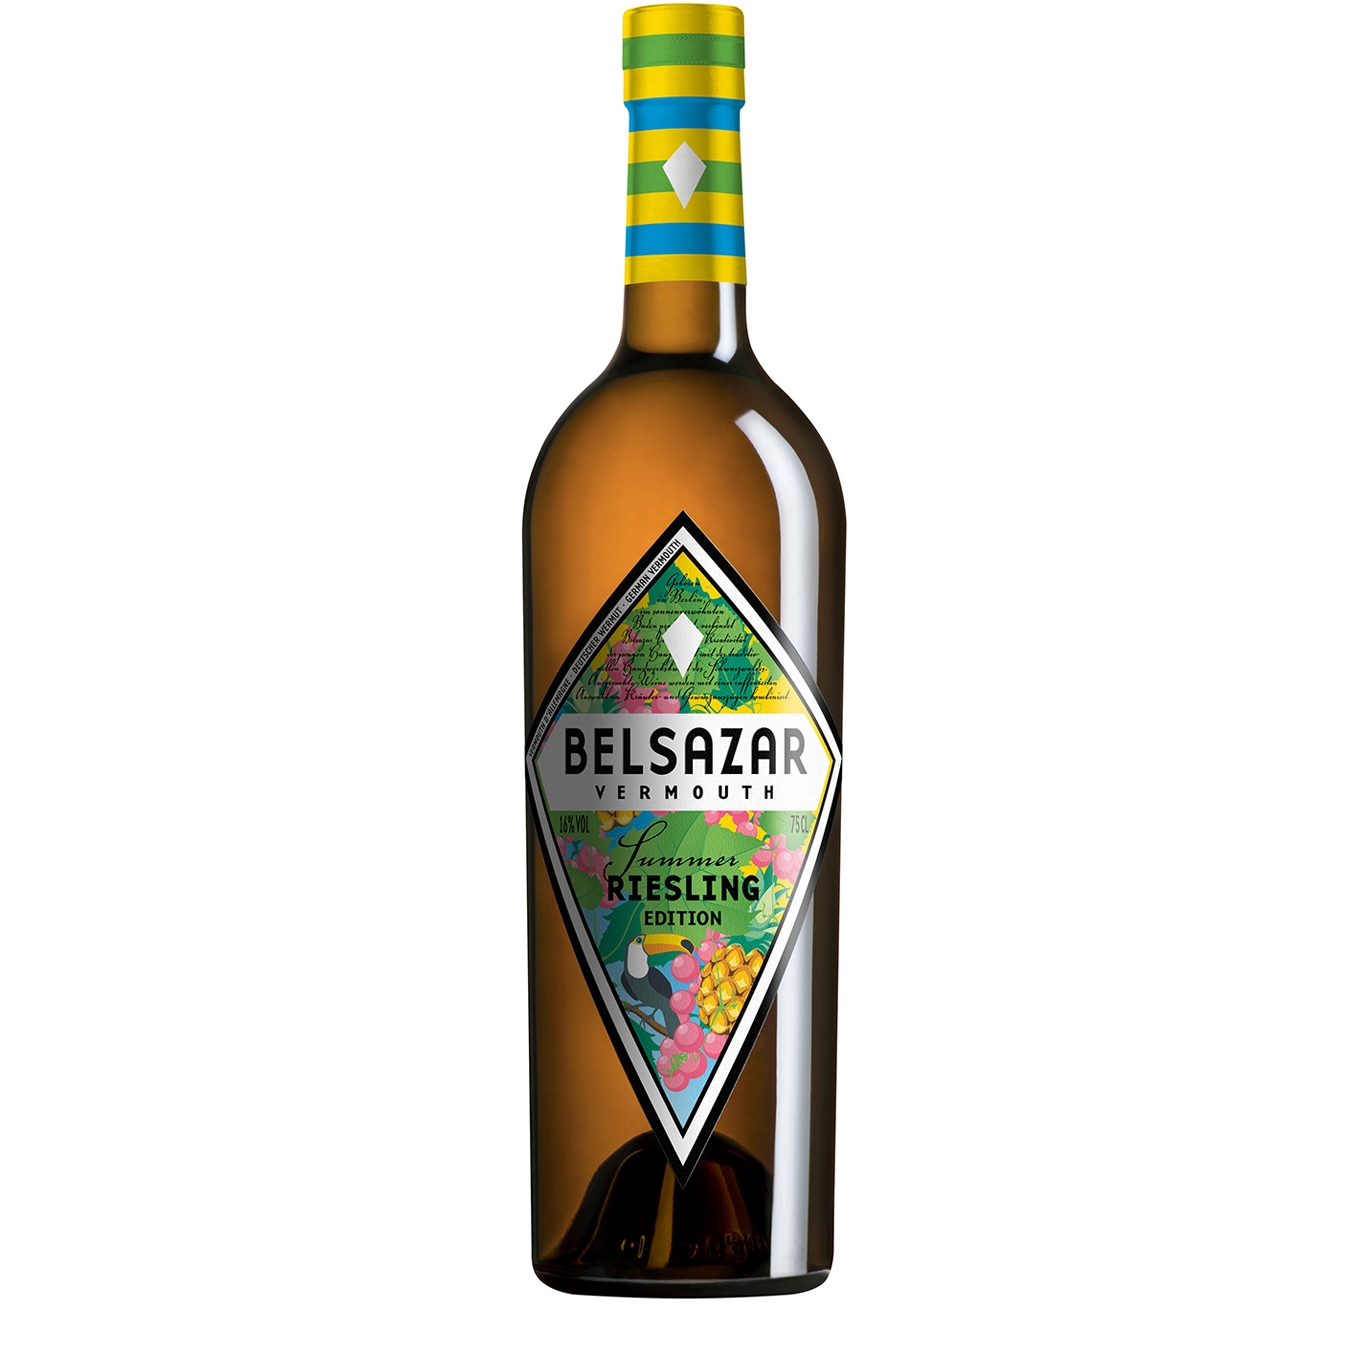 Belsazar Dr. Loosen Summer Riesling Edition Vermouth 2018